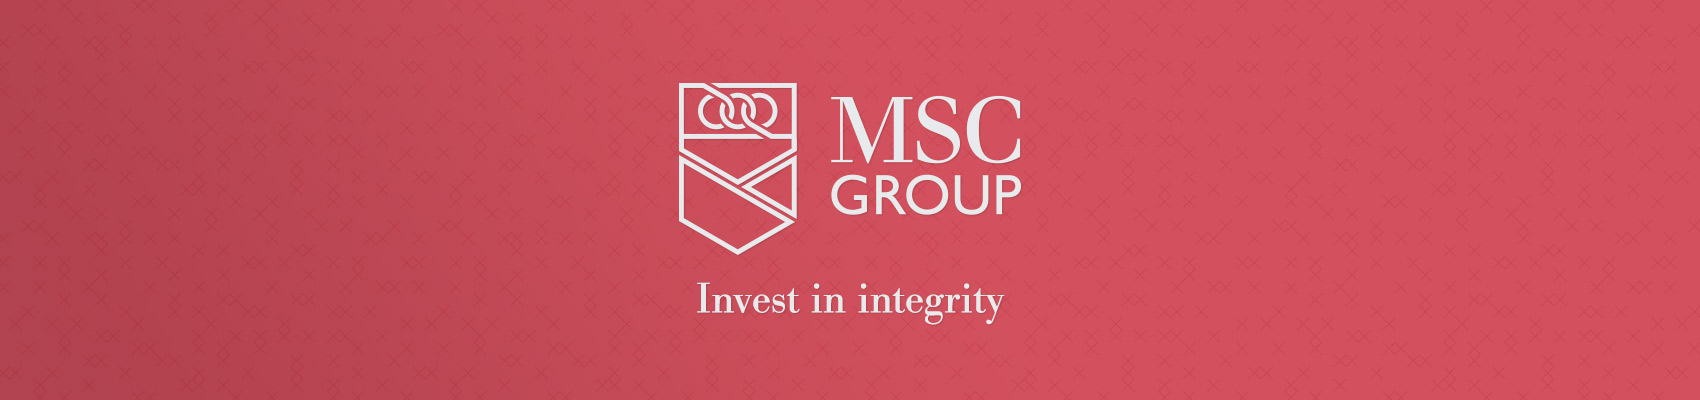 MSC-Logo-redpanel-English